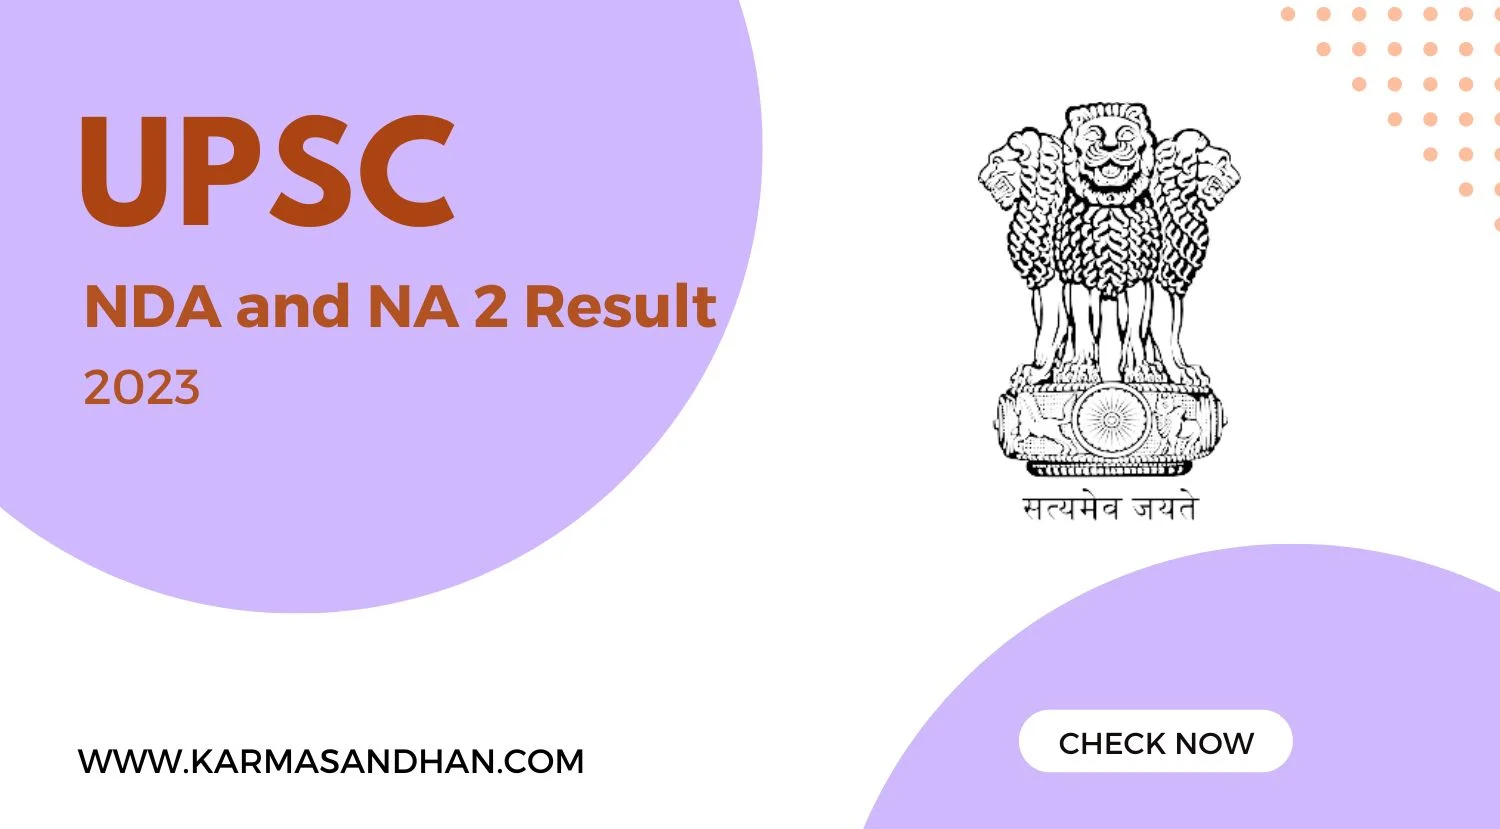 UPSC NDA and NA 2 Result 2023